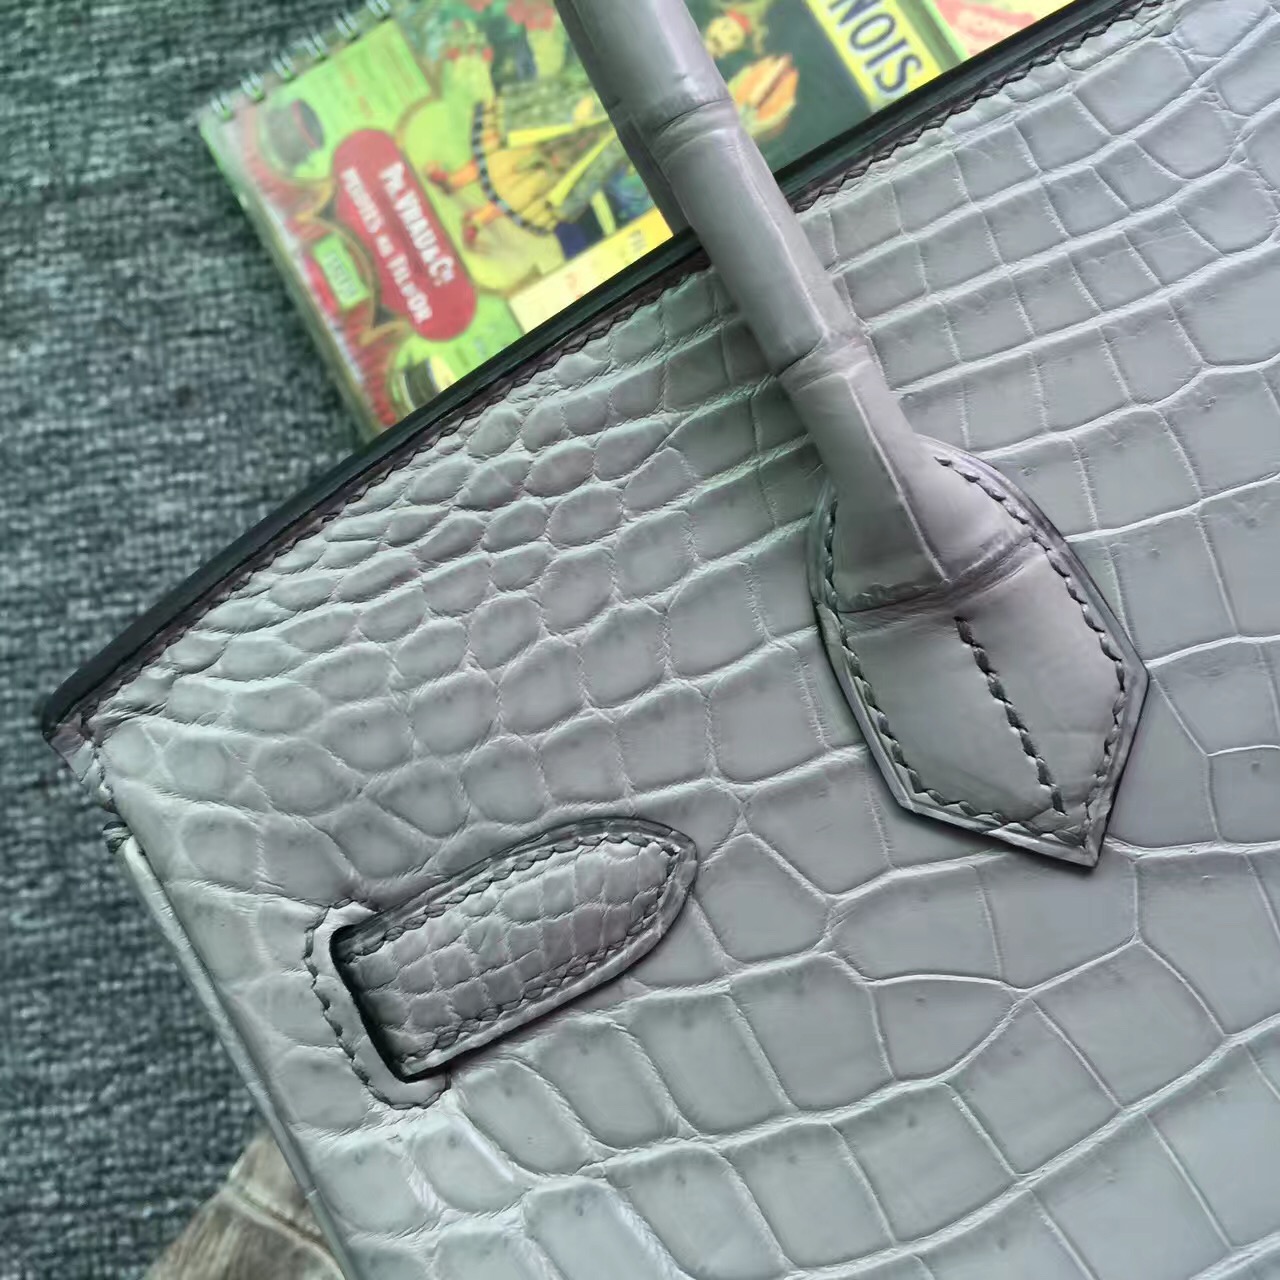 On Sale Hermes Crocodile Matt Leather Birkin Bag 30cm in Galaxy Grey